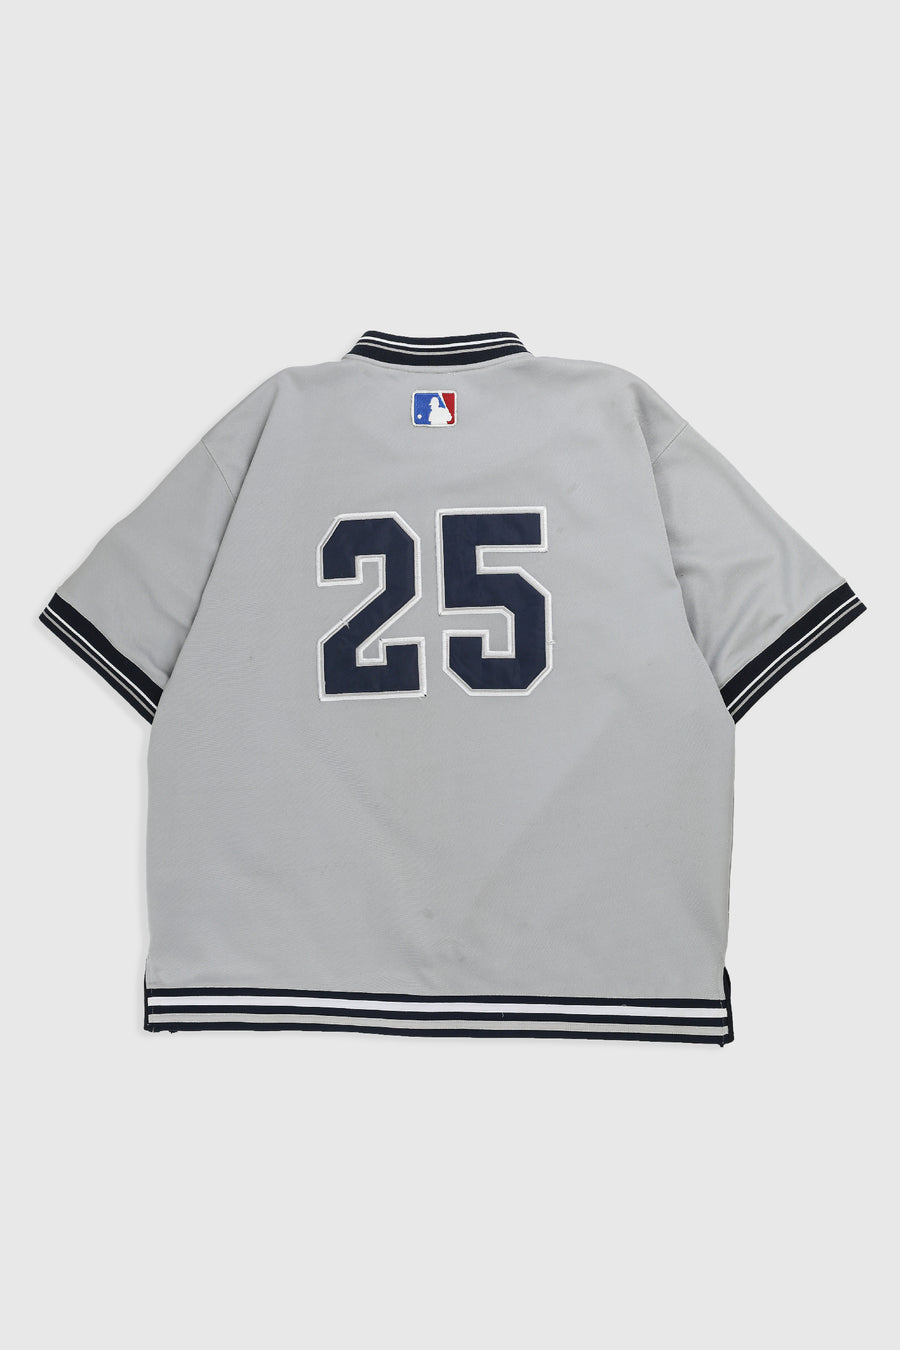 Vintage NY Yankees MLB Baseball Jersey